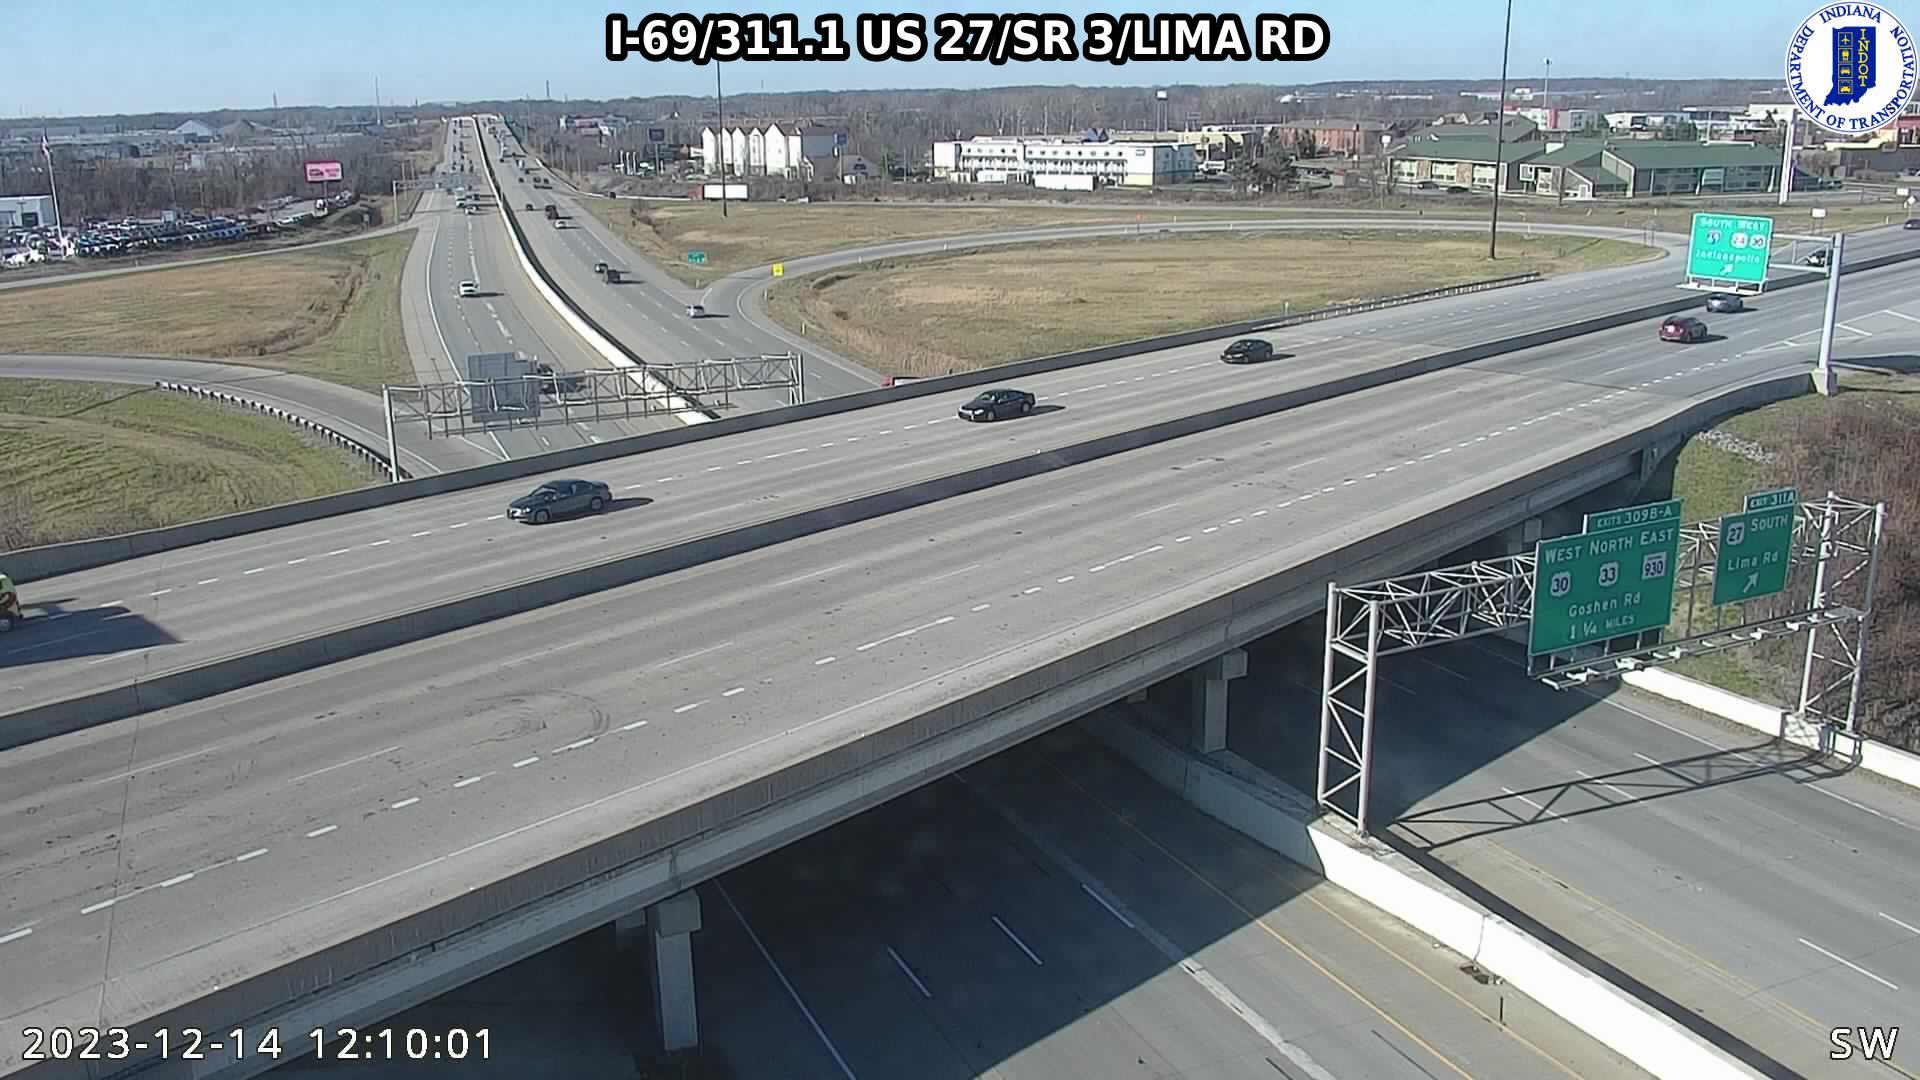 Fort Wayne: I-69: I-69/311.1 US 27/SR 3/LIMA RD Traffic Camera